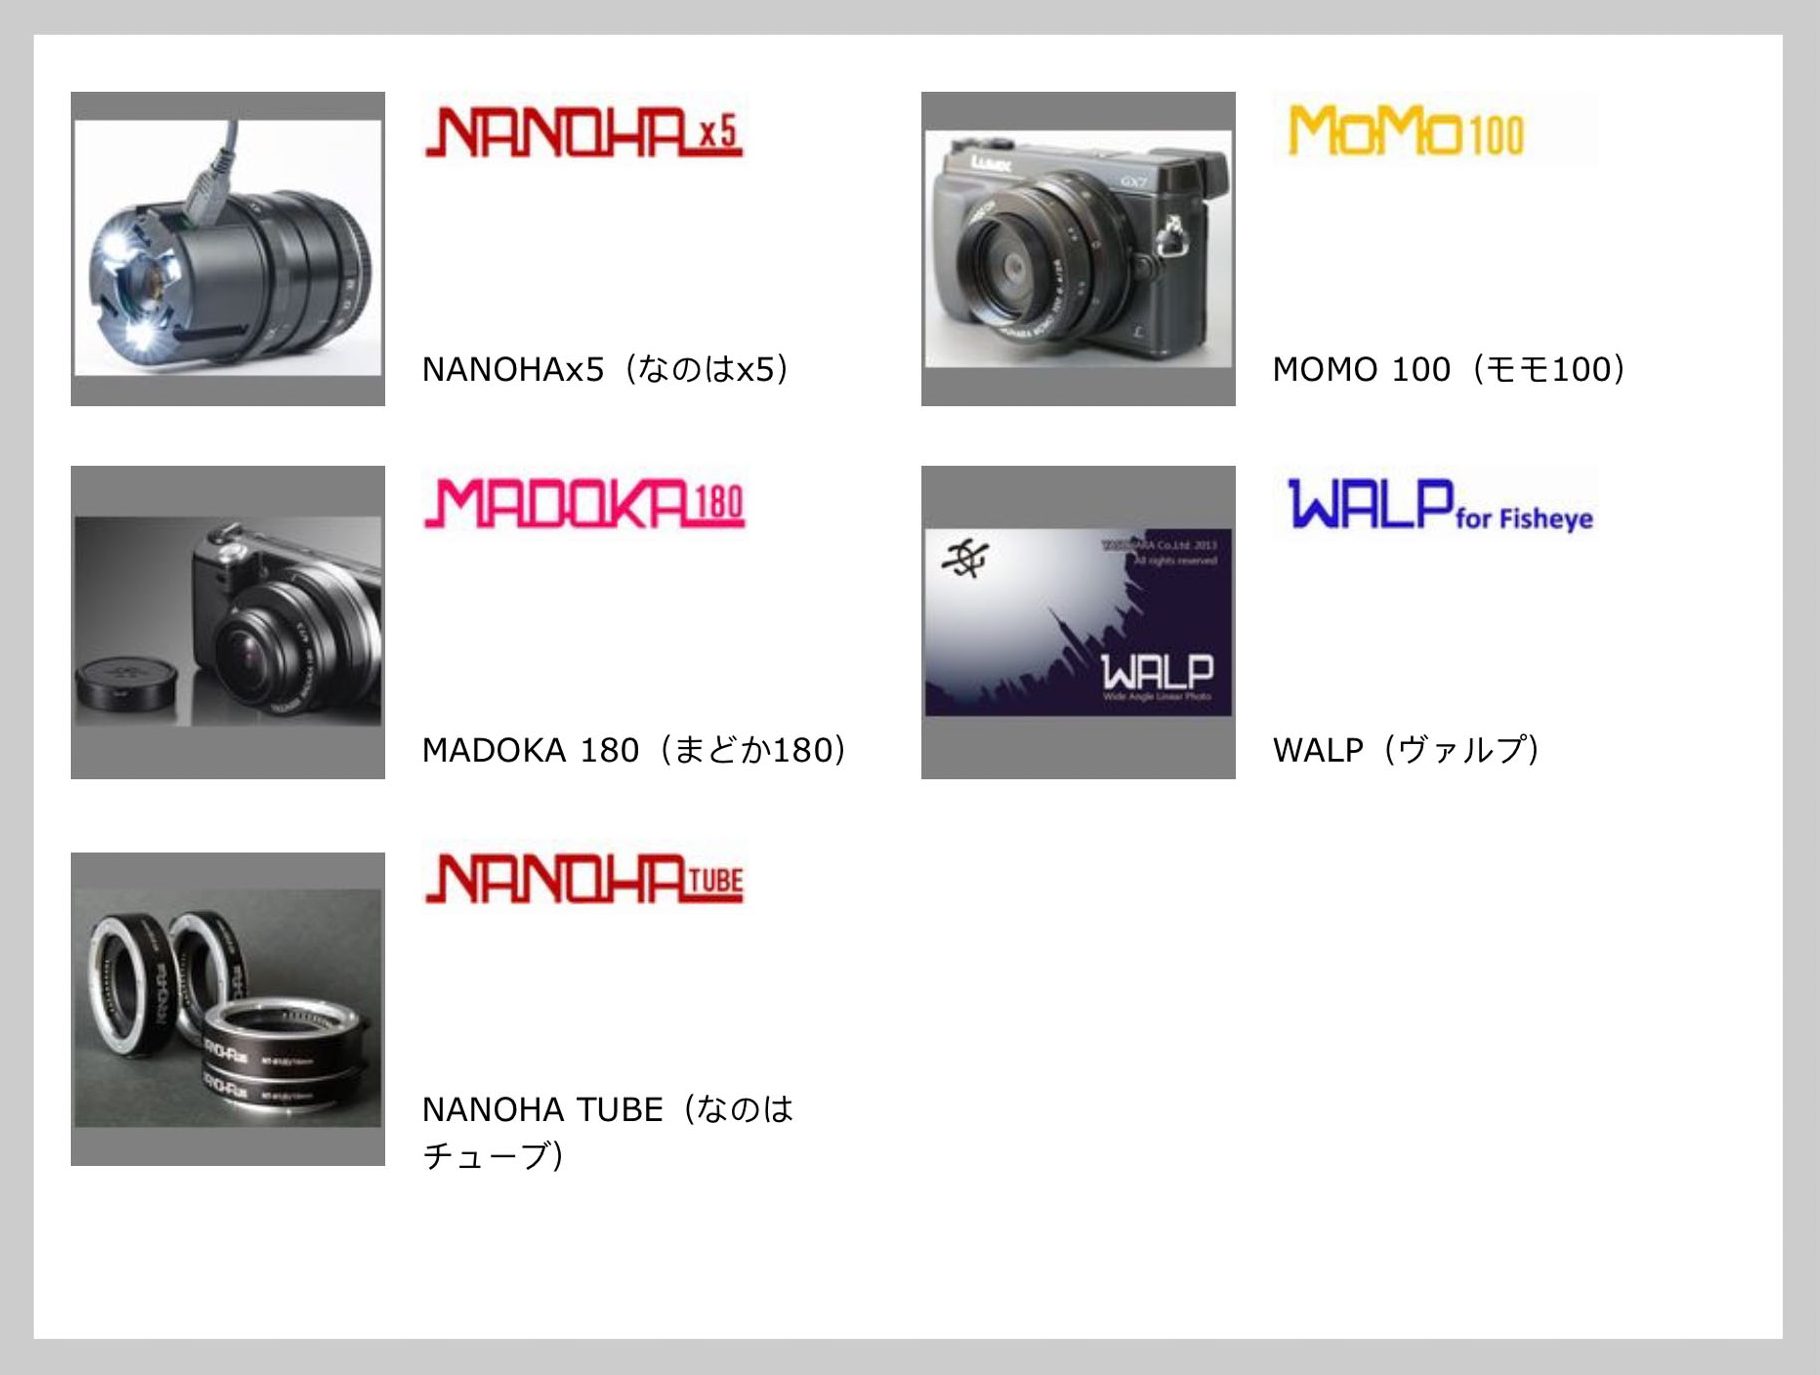 Current Yasuhara lenses